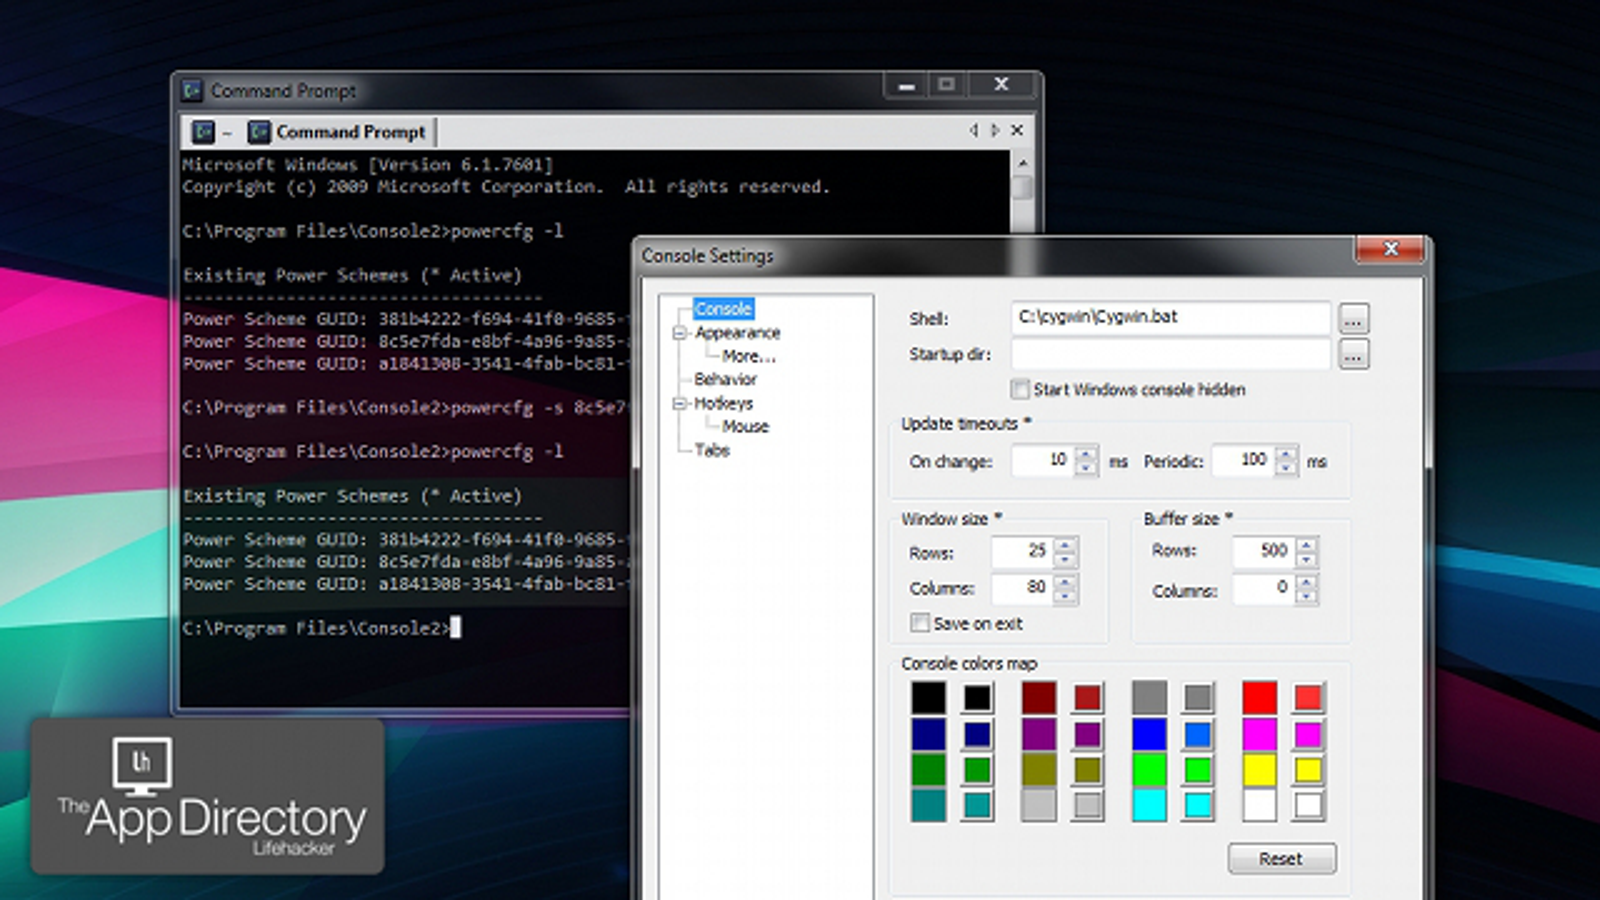 windows terminal emulation program